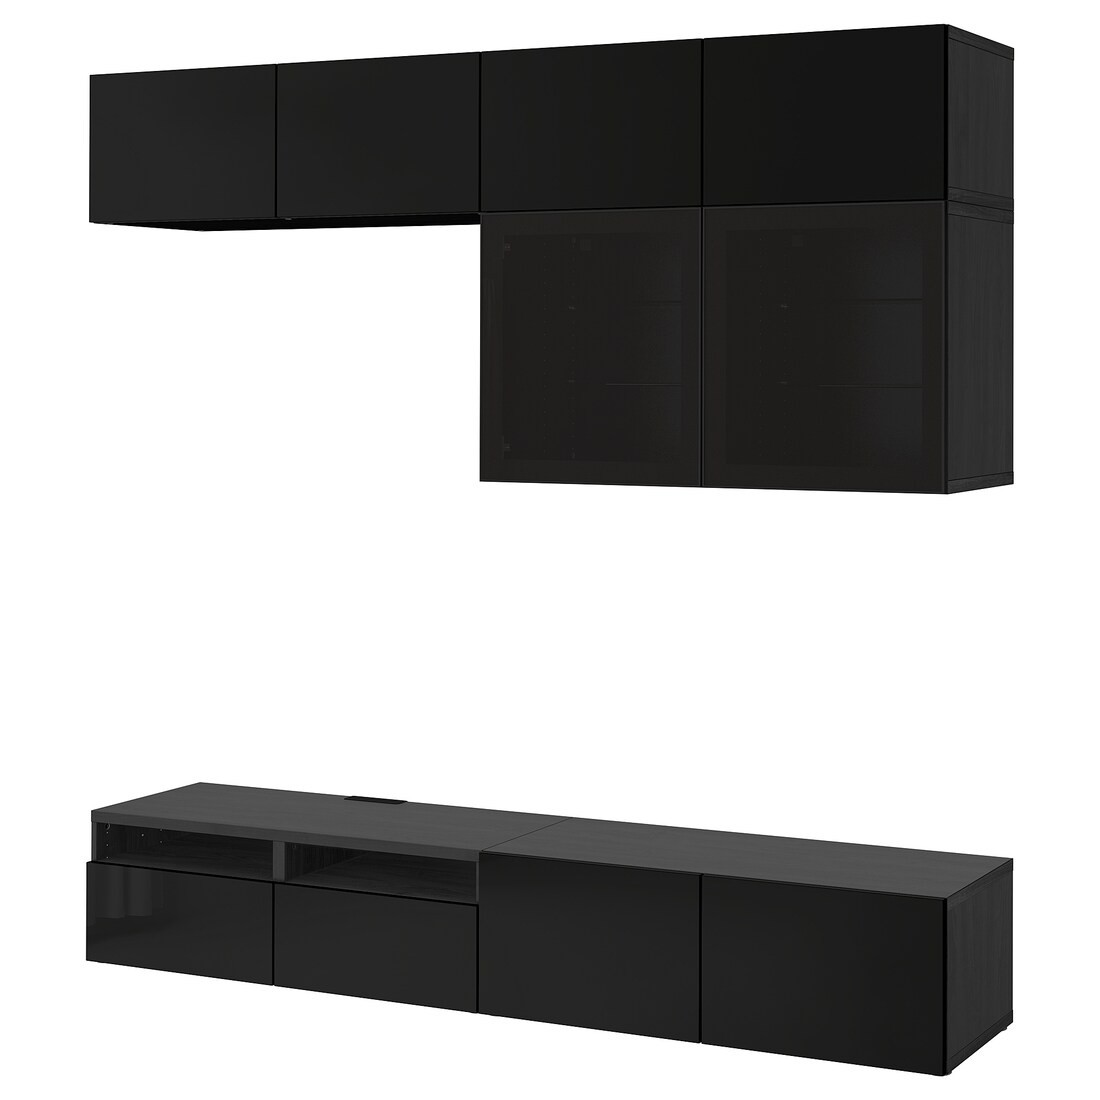 IKEA BESTÅ БЕСТО Комбинация для ТВ / стеклянные двери, черно-коричневый / Selsviken глянцевый / черное дымчатое стекло, 240x42x231 см 19412237 194.122.37